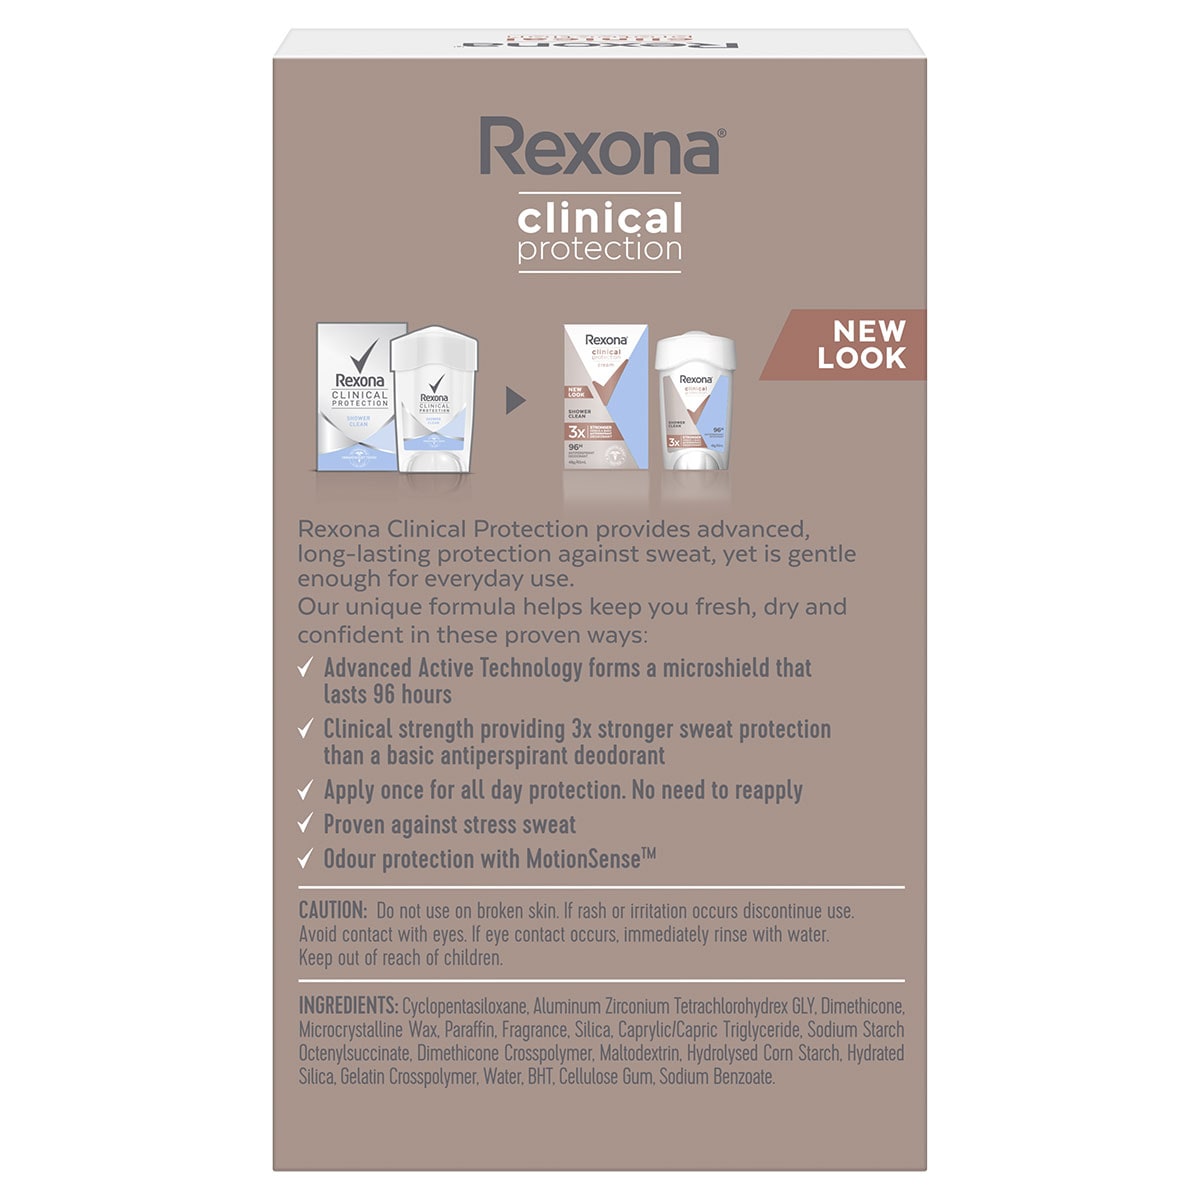 Rexona Women Clinical Protection Antiperspirant Shower Clean 45ml